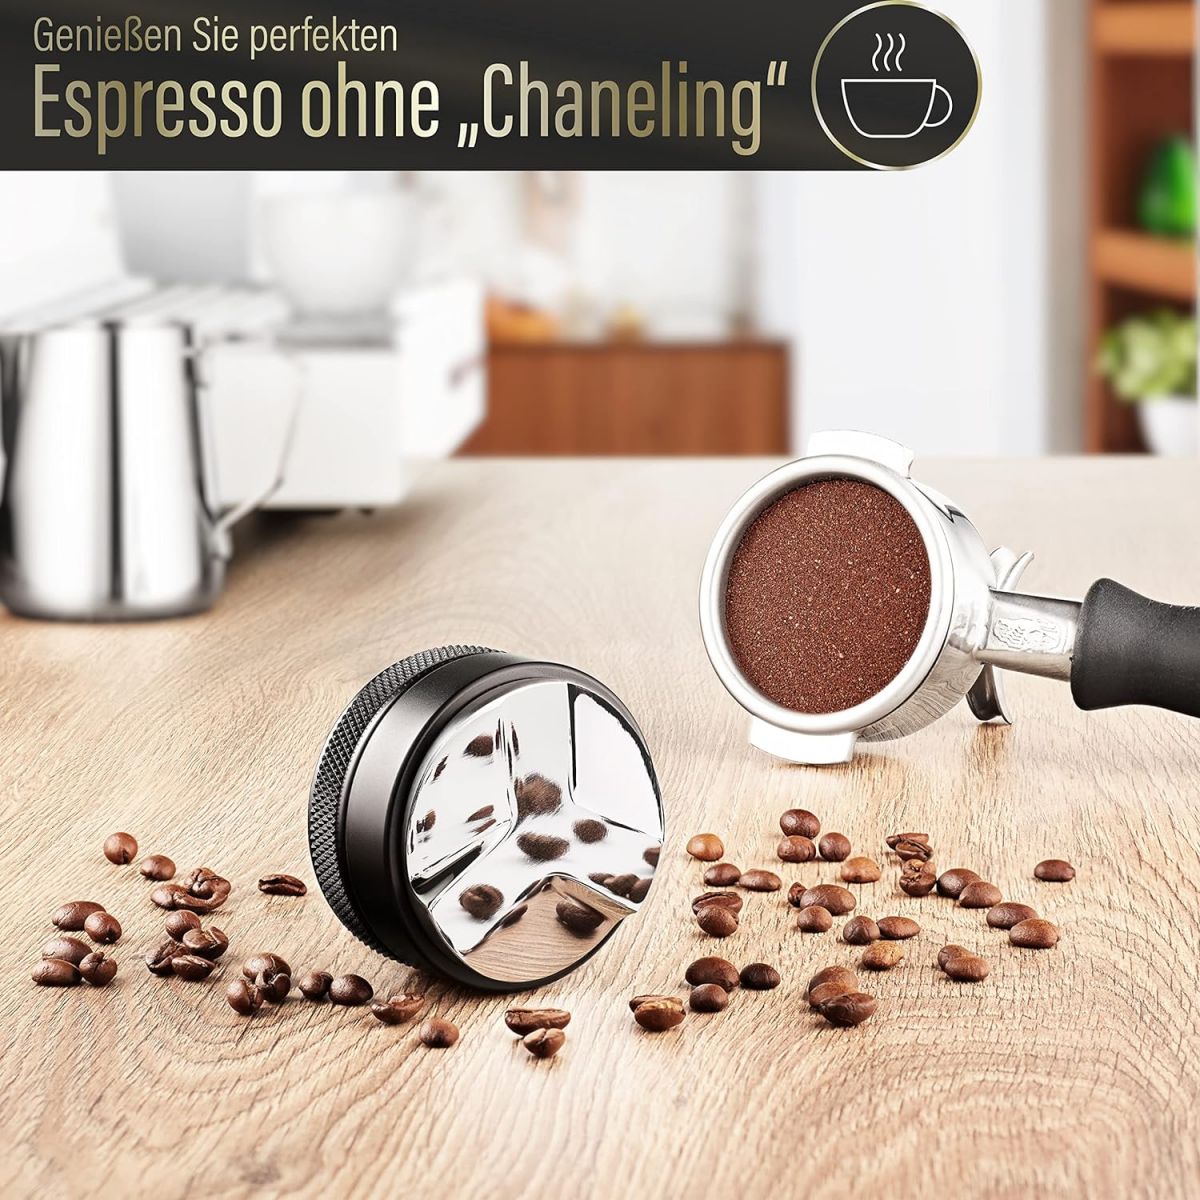 Espresso Distributor 54 mm for Perfect Results 